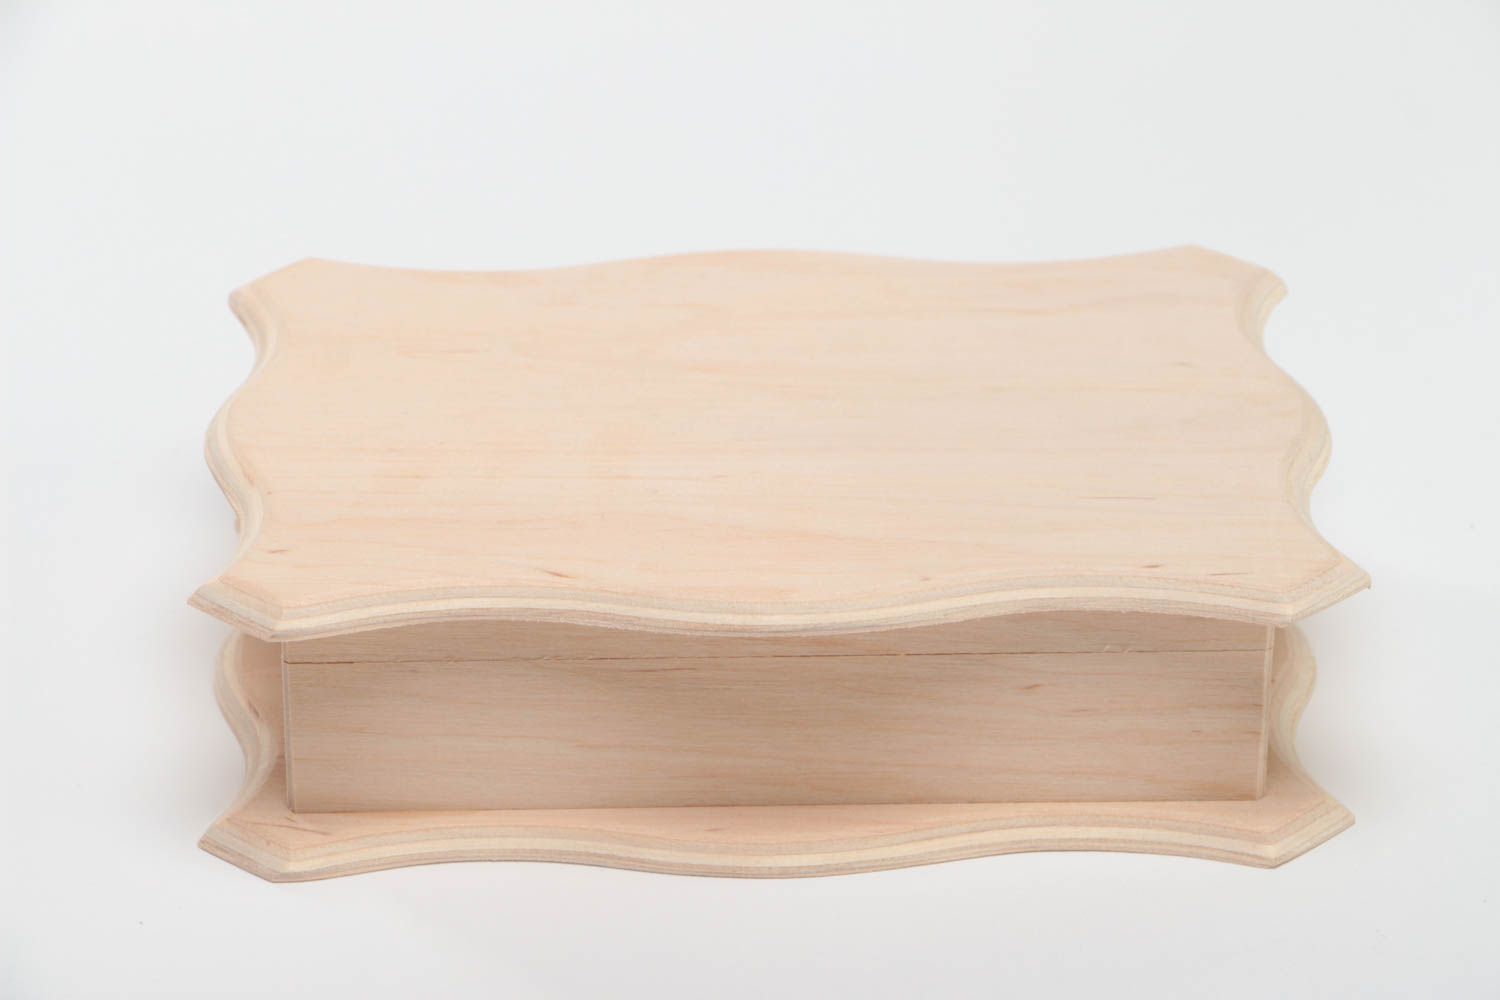 Handmade plywood craft blank rectangular jewelry box with figured edges photo 2